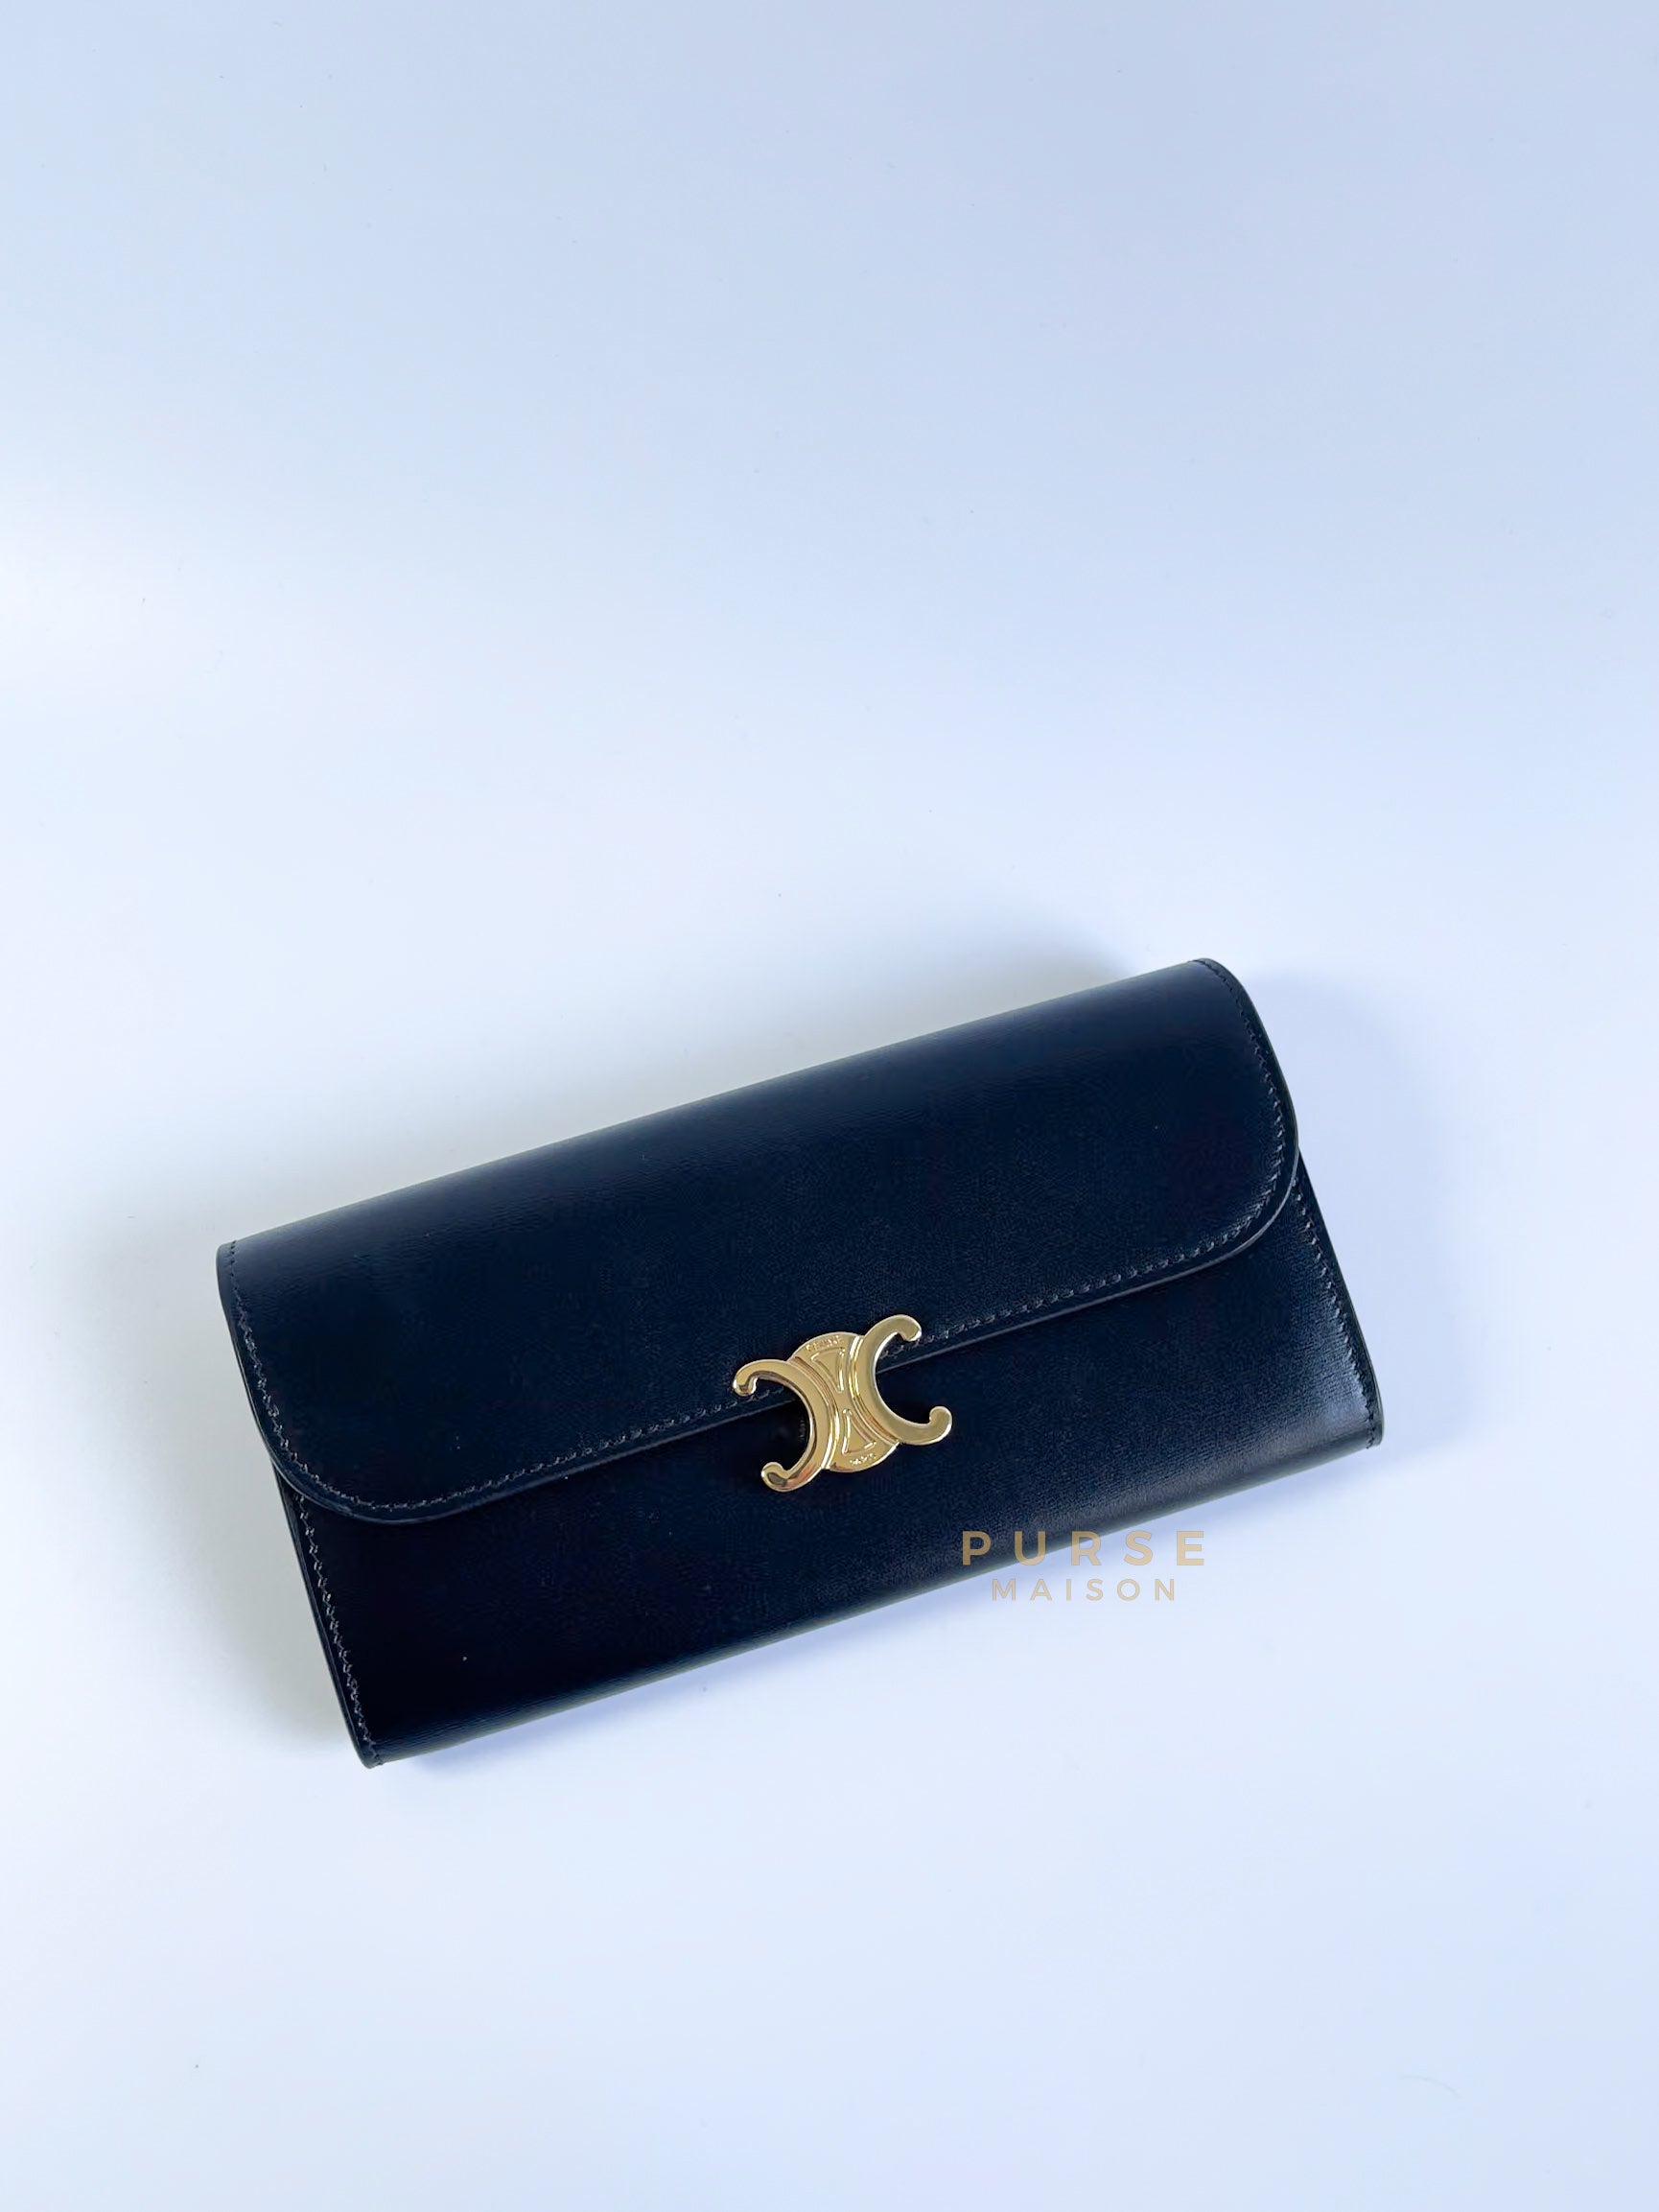 Triomphe Long Flap Wallet in Black Shiny Calfskin | Purse Maison Luxury Bags Shop